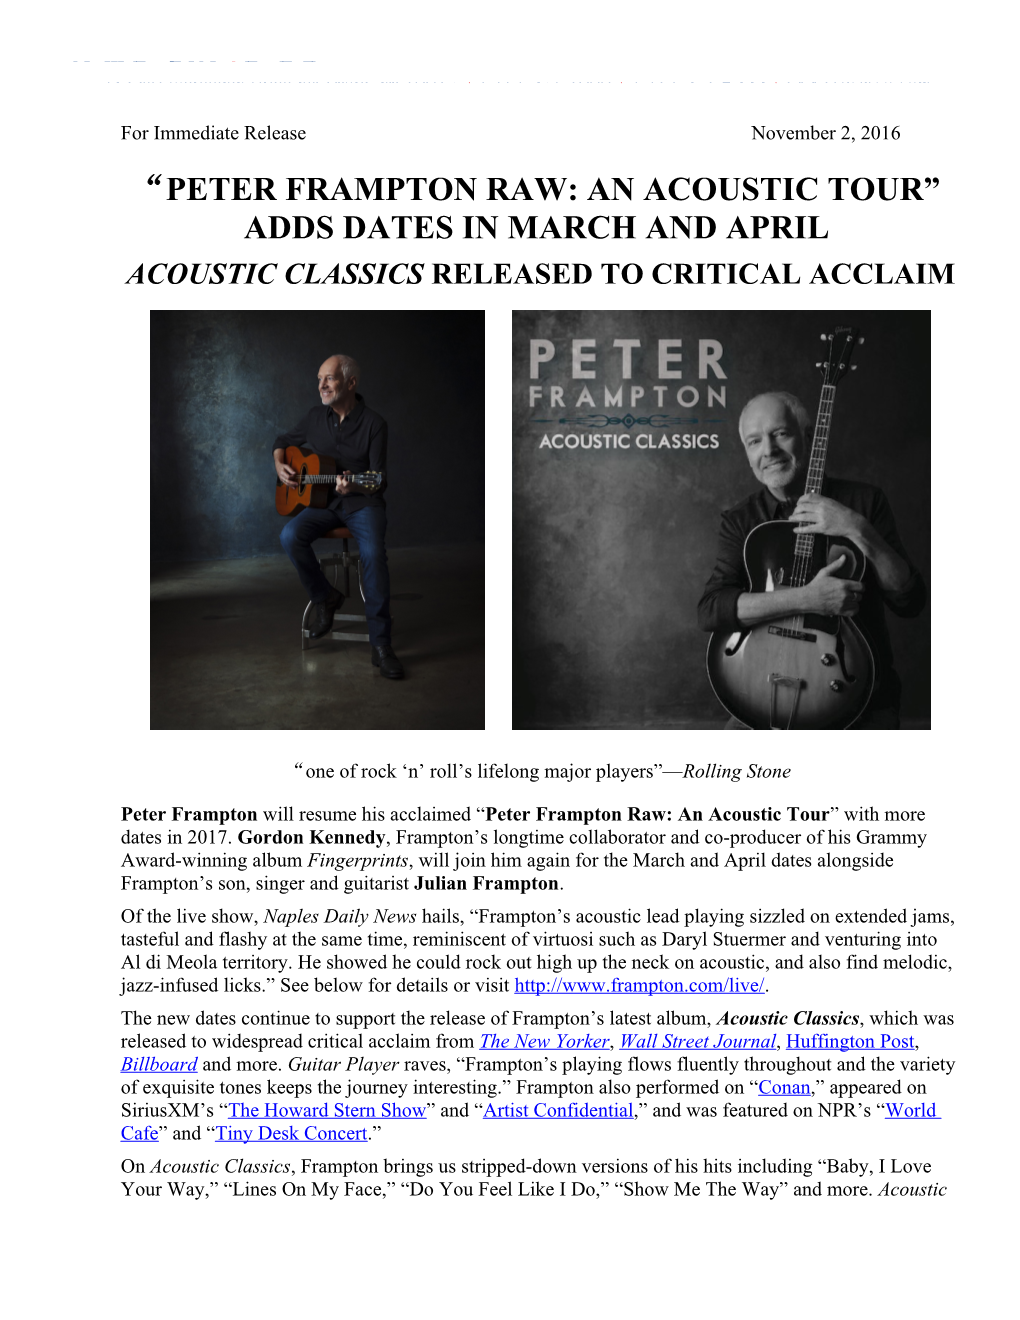 Peter Frampton Raw: an Acoustic Tour